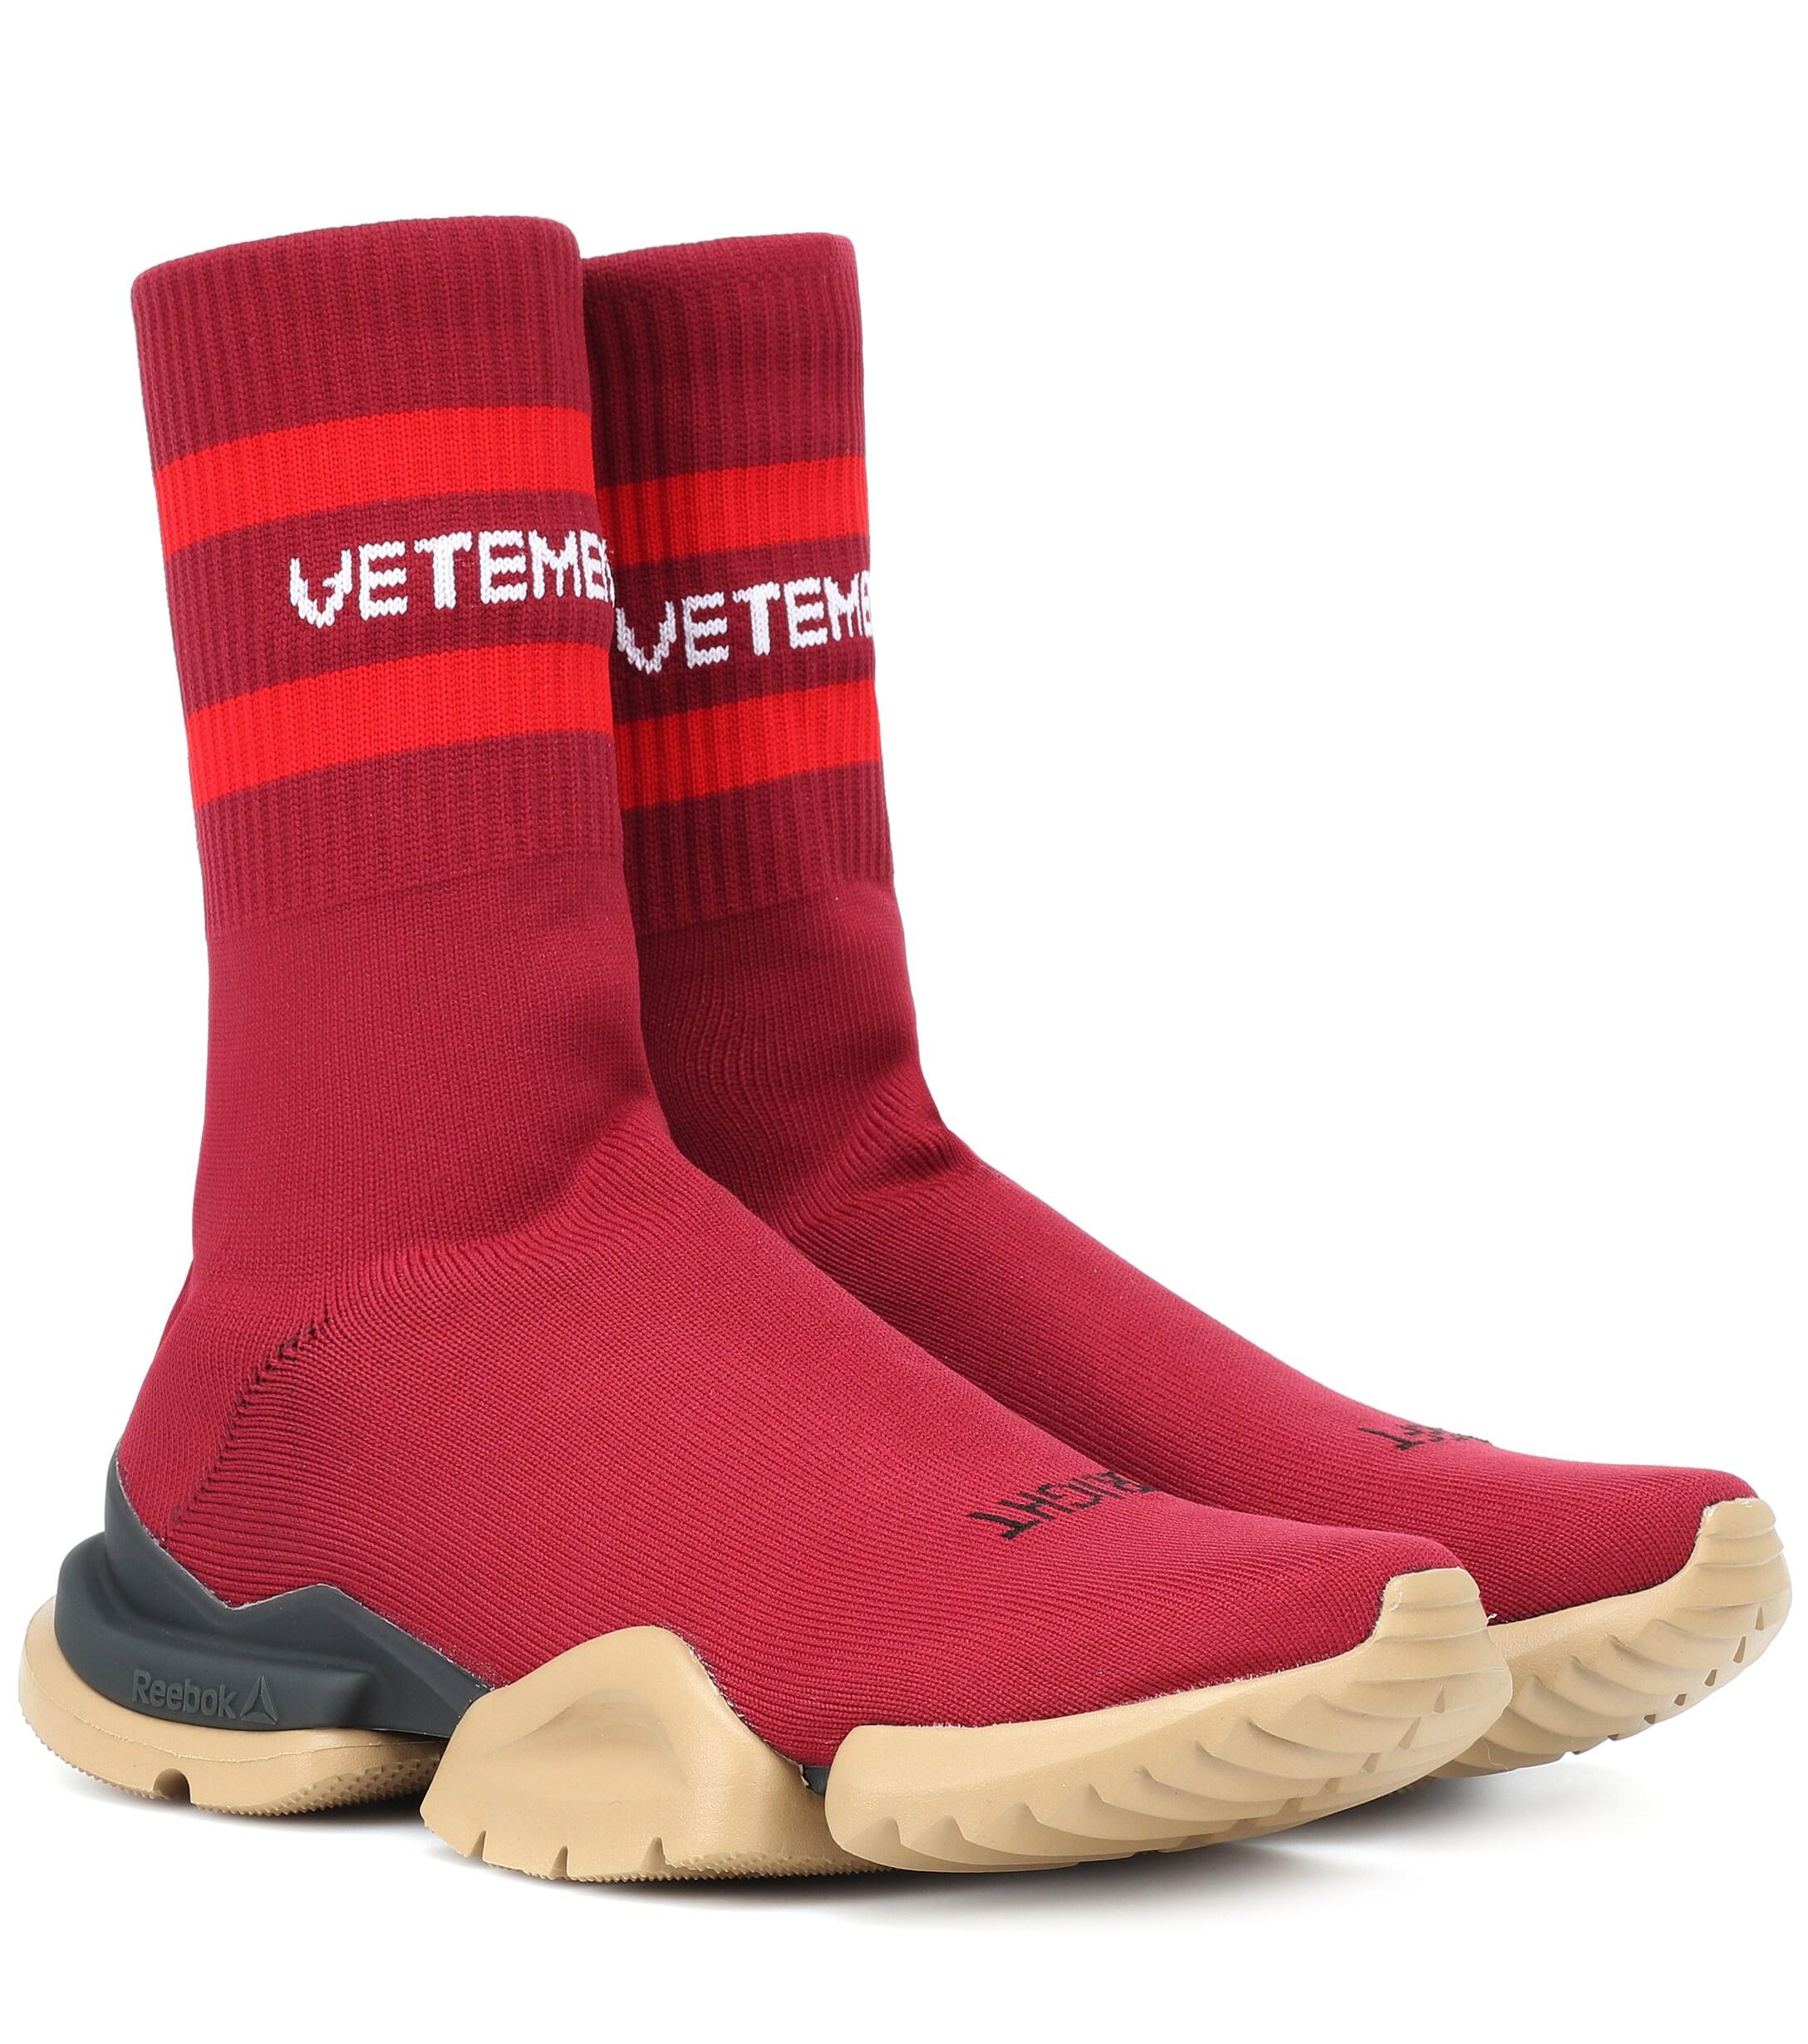 Vetements X Reebok Classic Sock Sneakers in Burgundy (Red) - Lyst